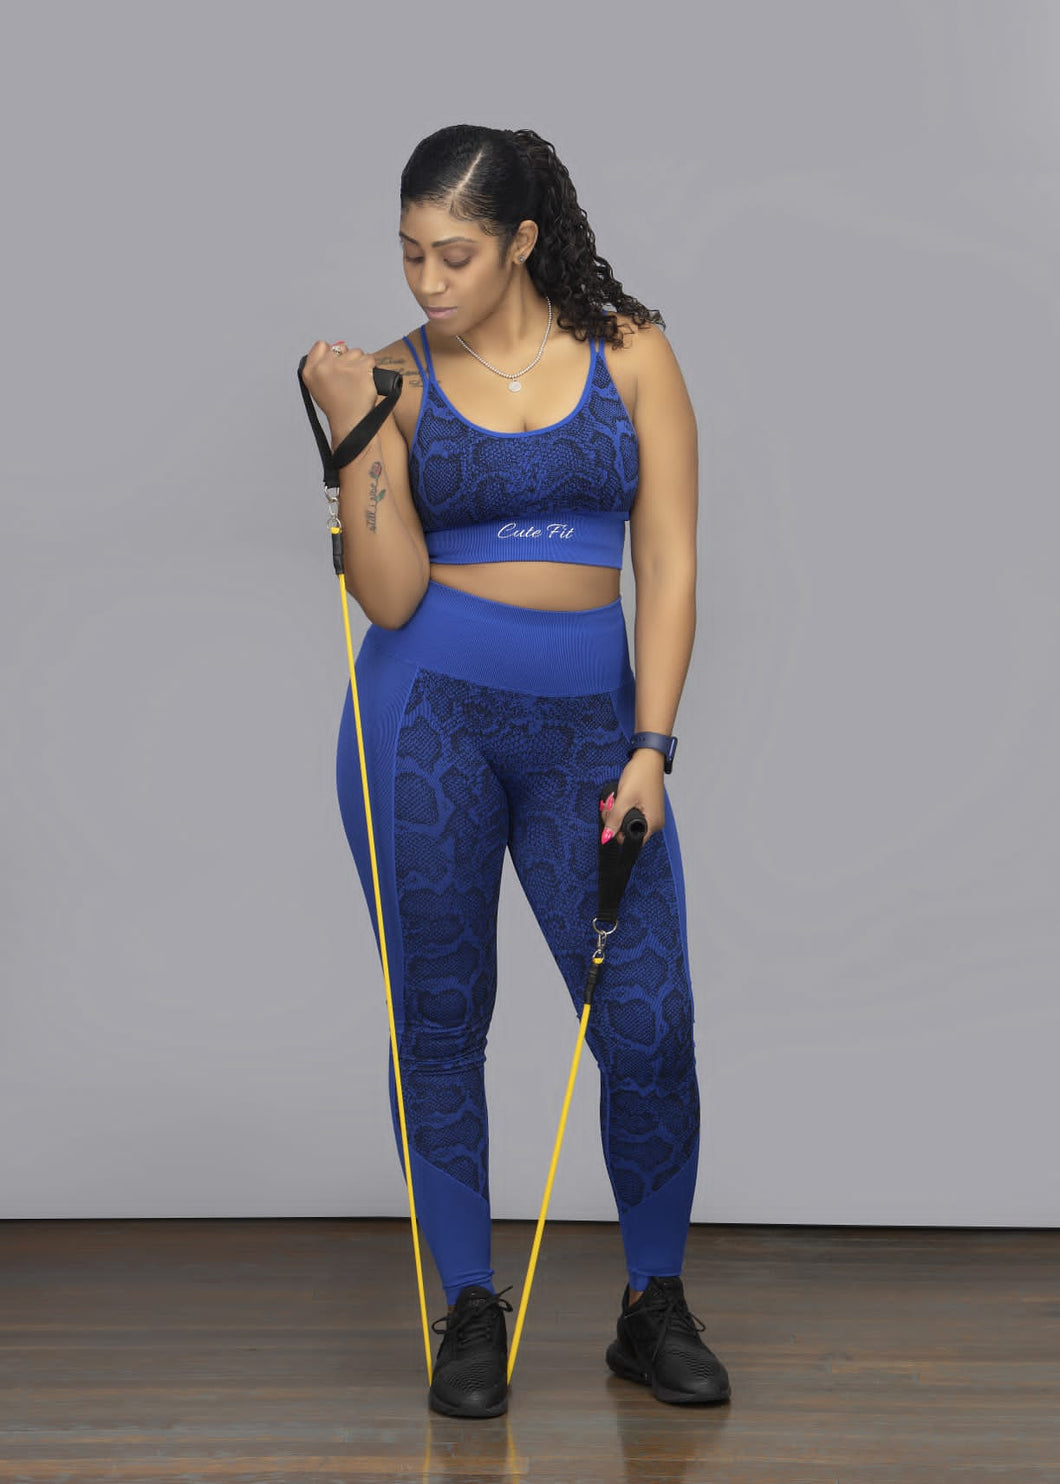 Blue snakeskin print set - Cute Fit Athletics